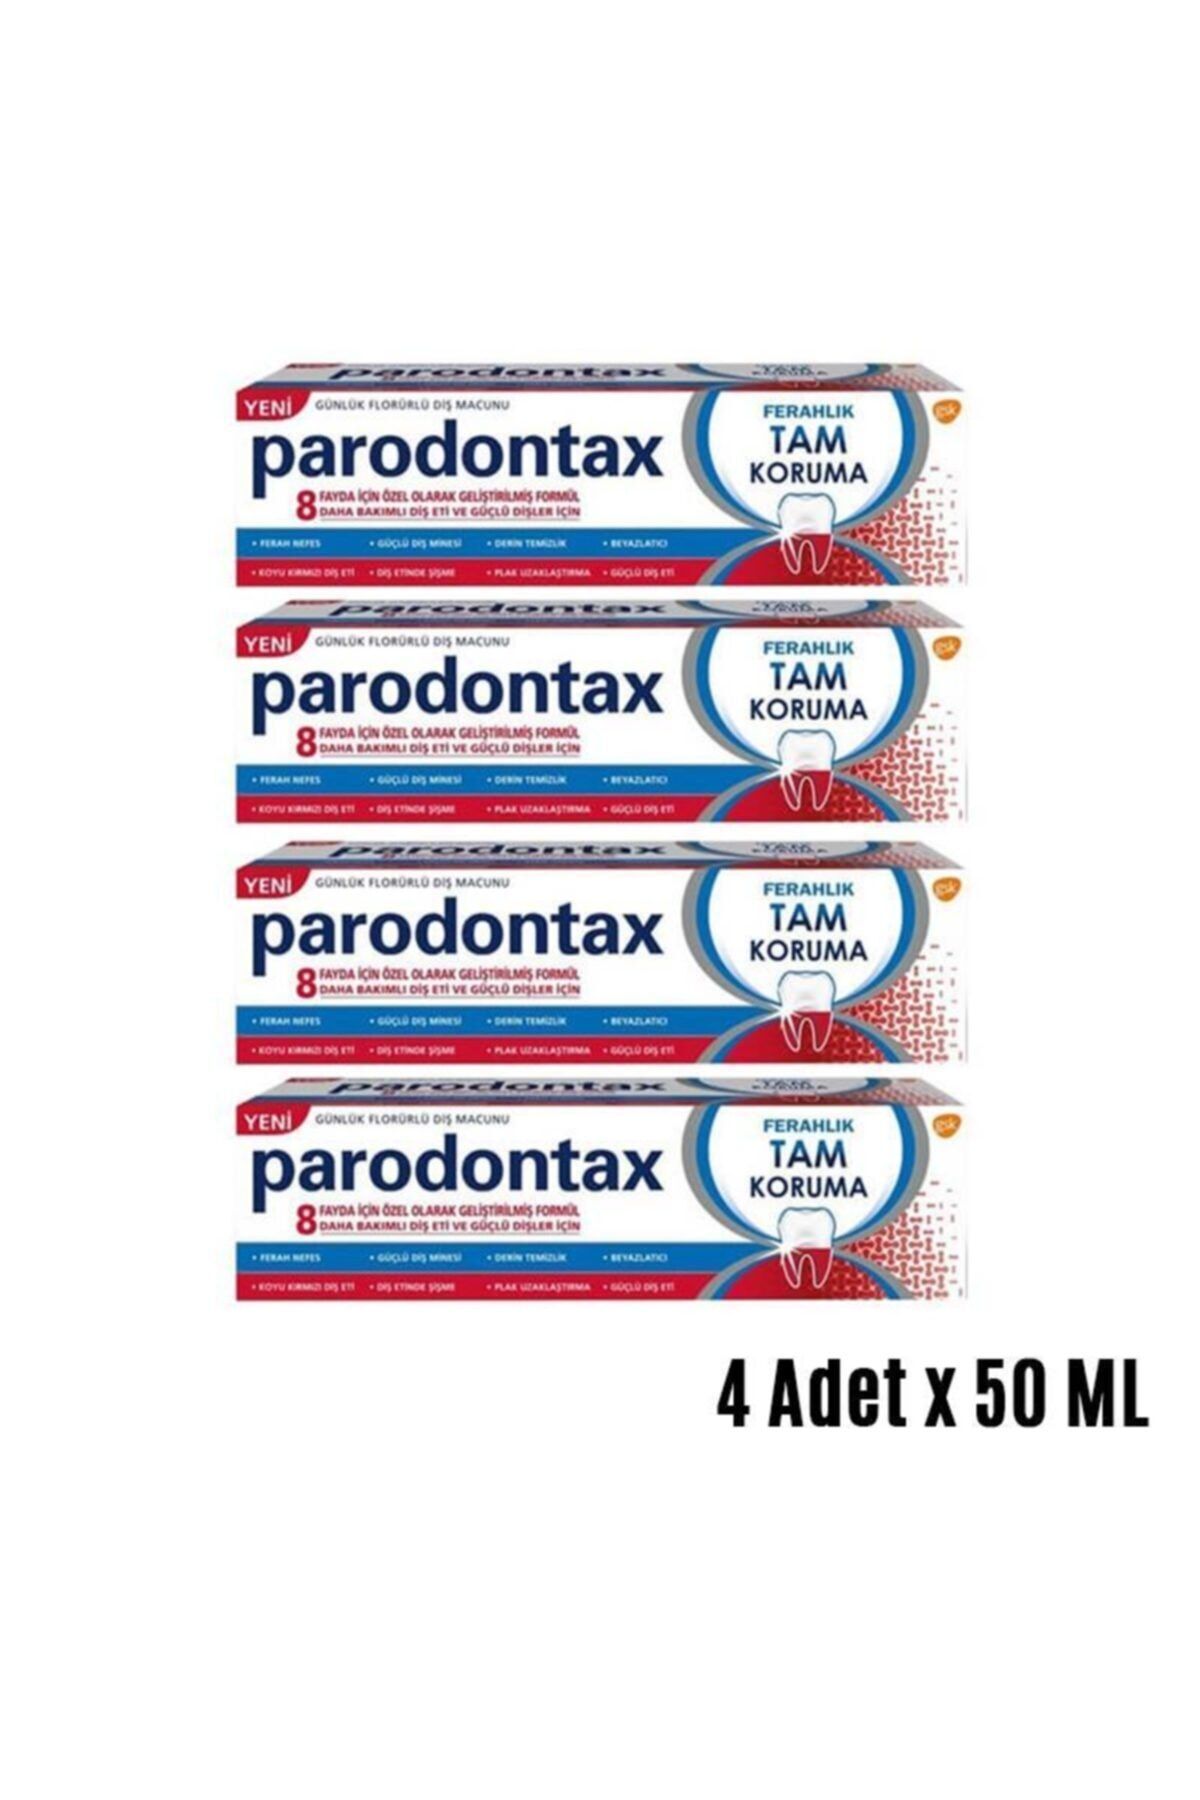 Parodontax Ferahlık Tam Koruma 50ml (80gr.) X 4adet